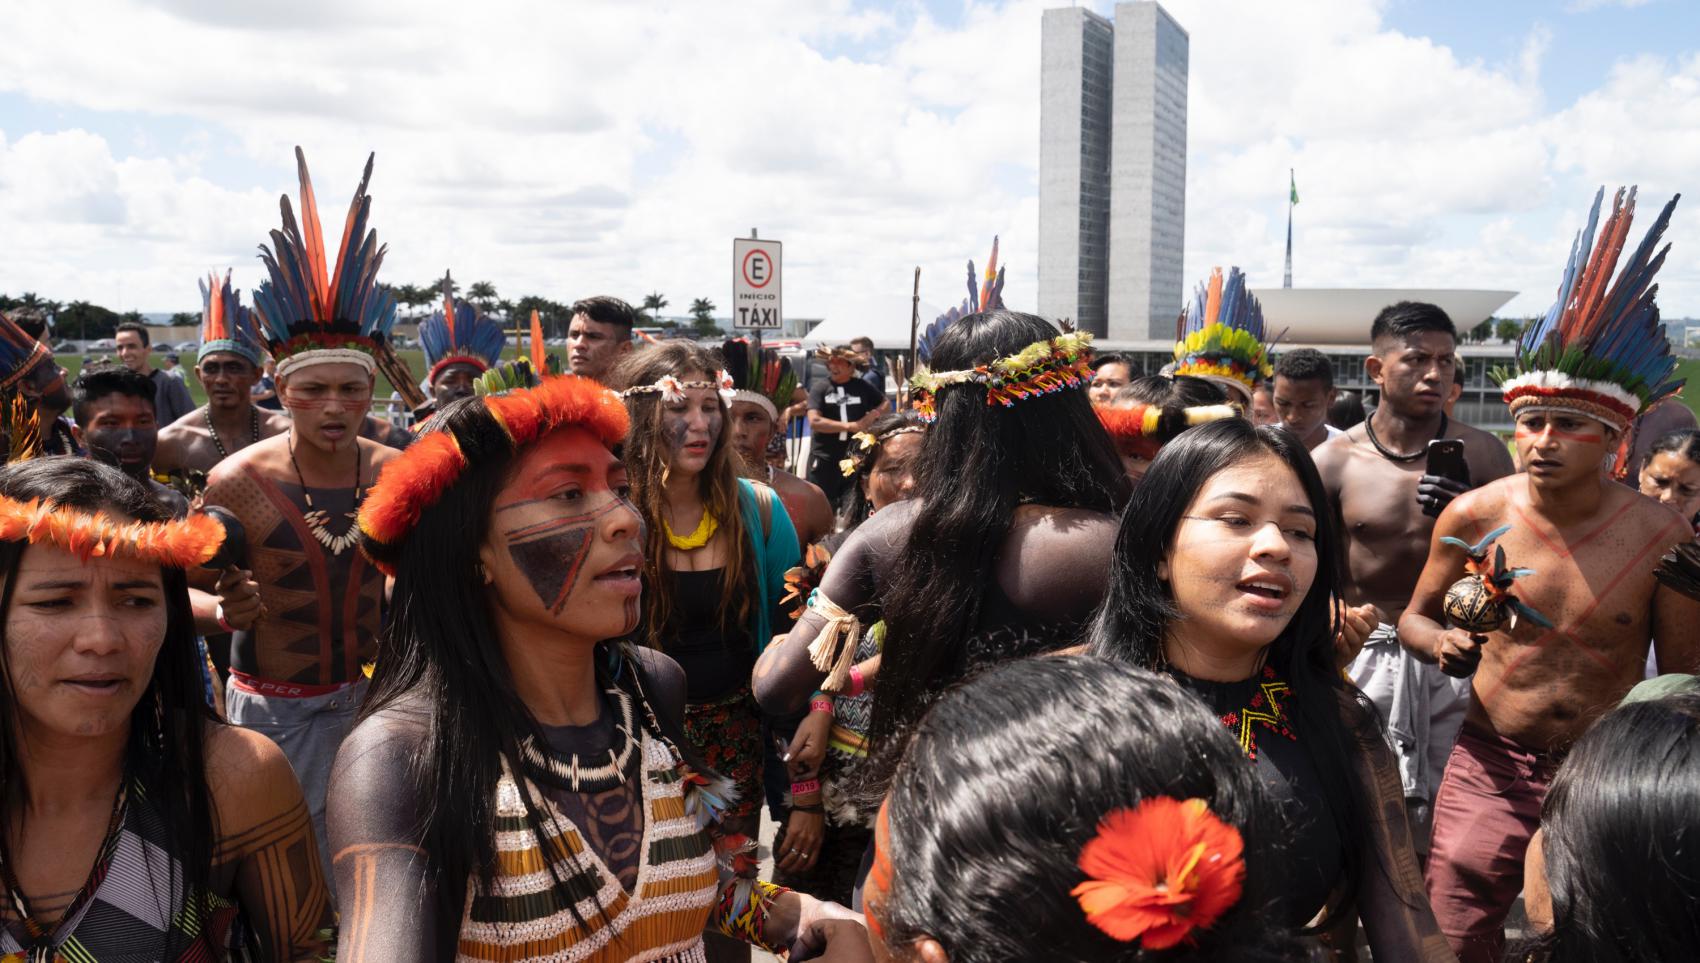 Indigeneous communities are marching at Acampamento Terra Livre